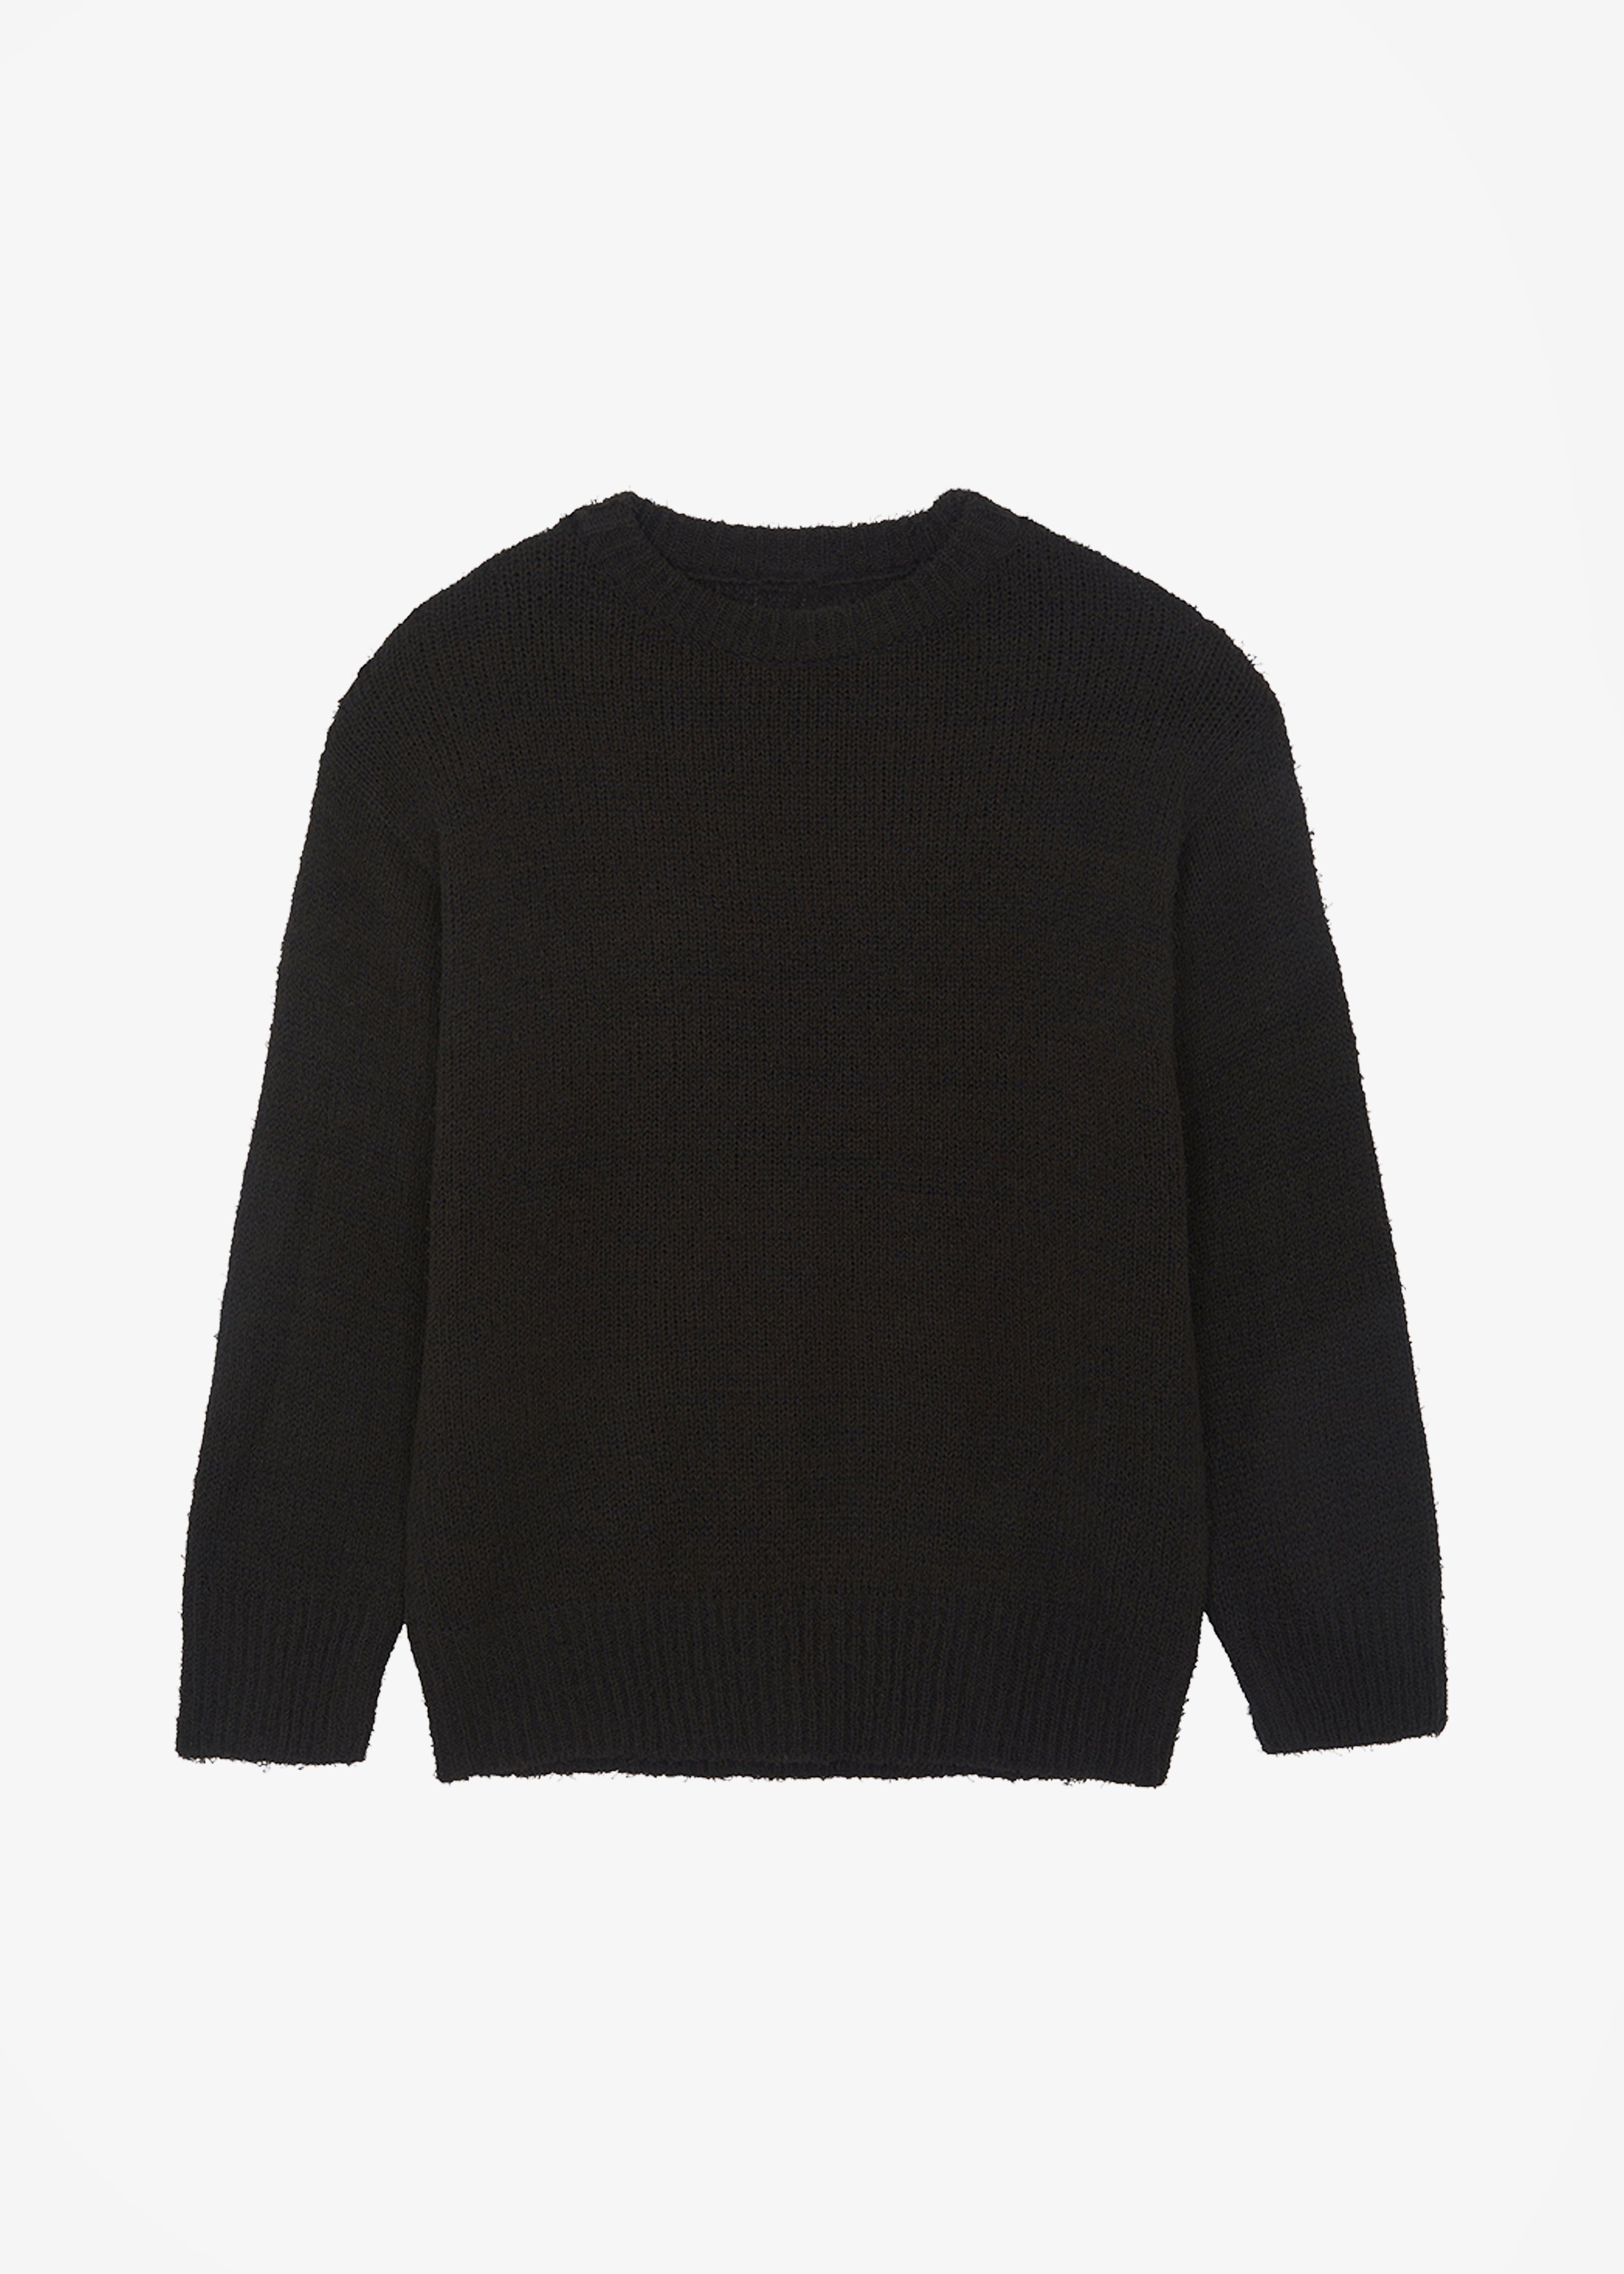 Ahine Sweater - Black - 8